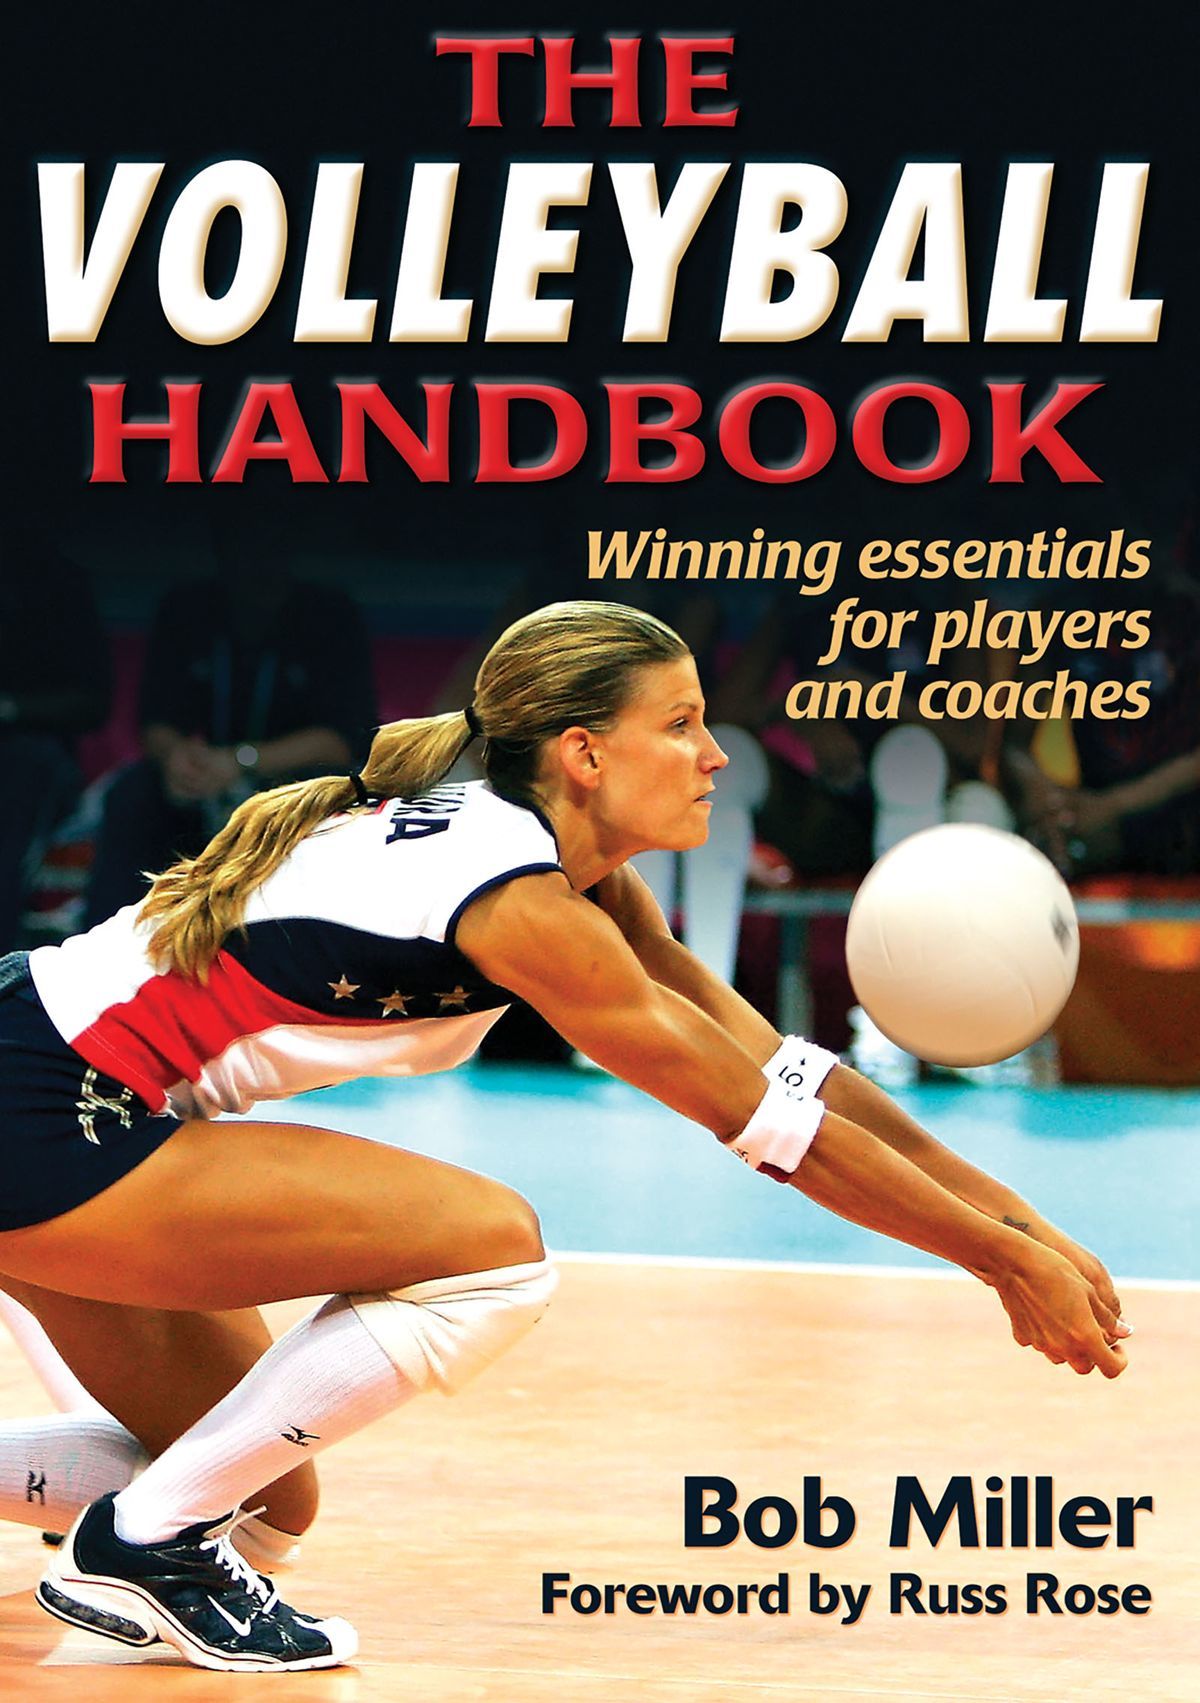 The Volleyball Handbook